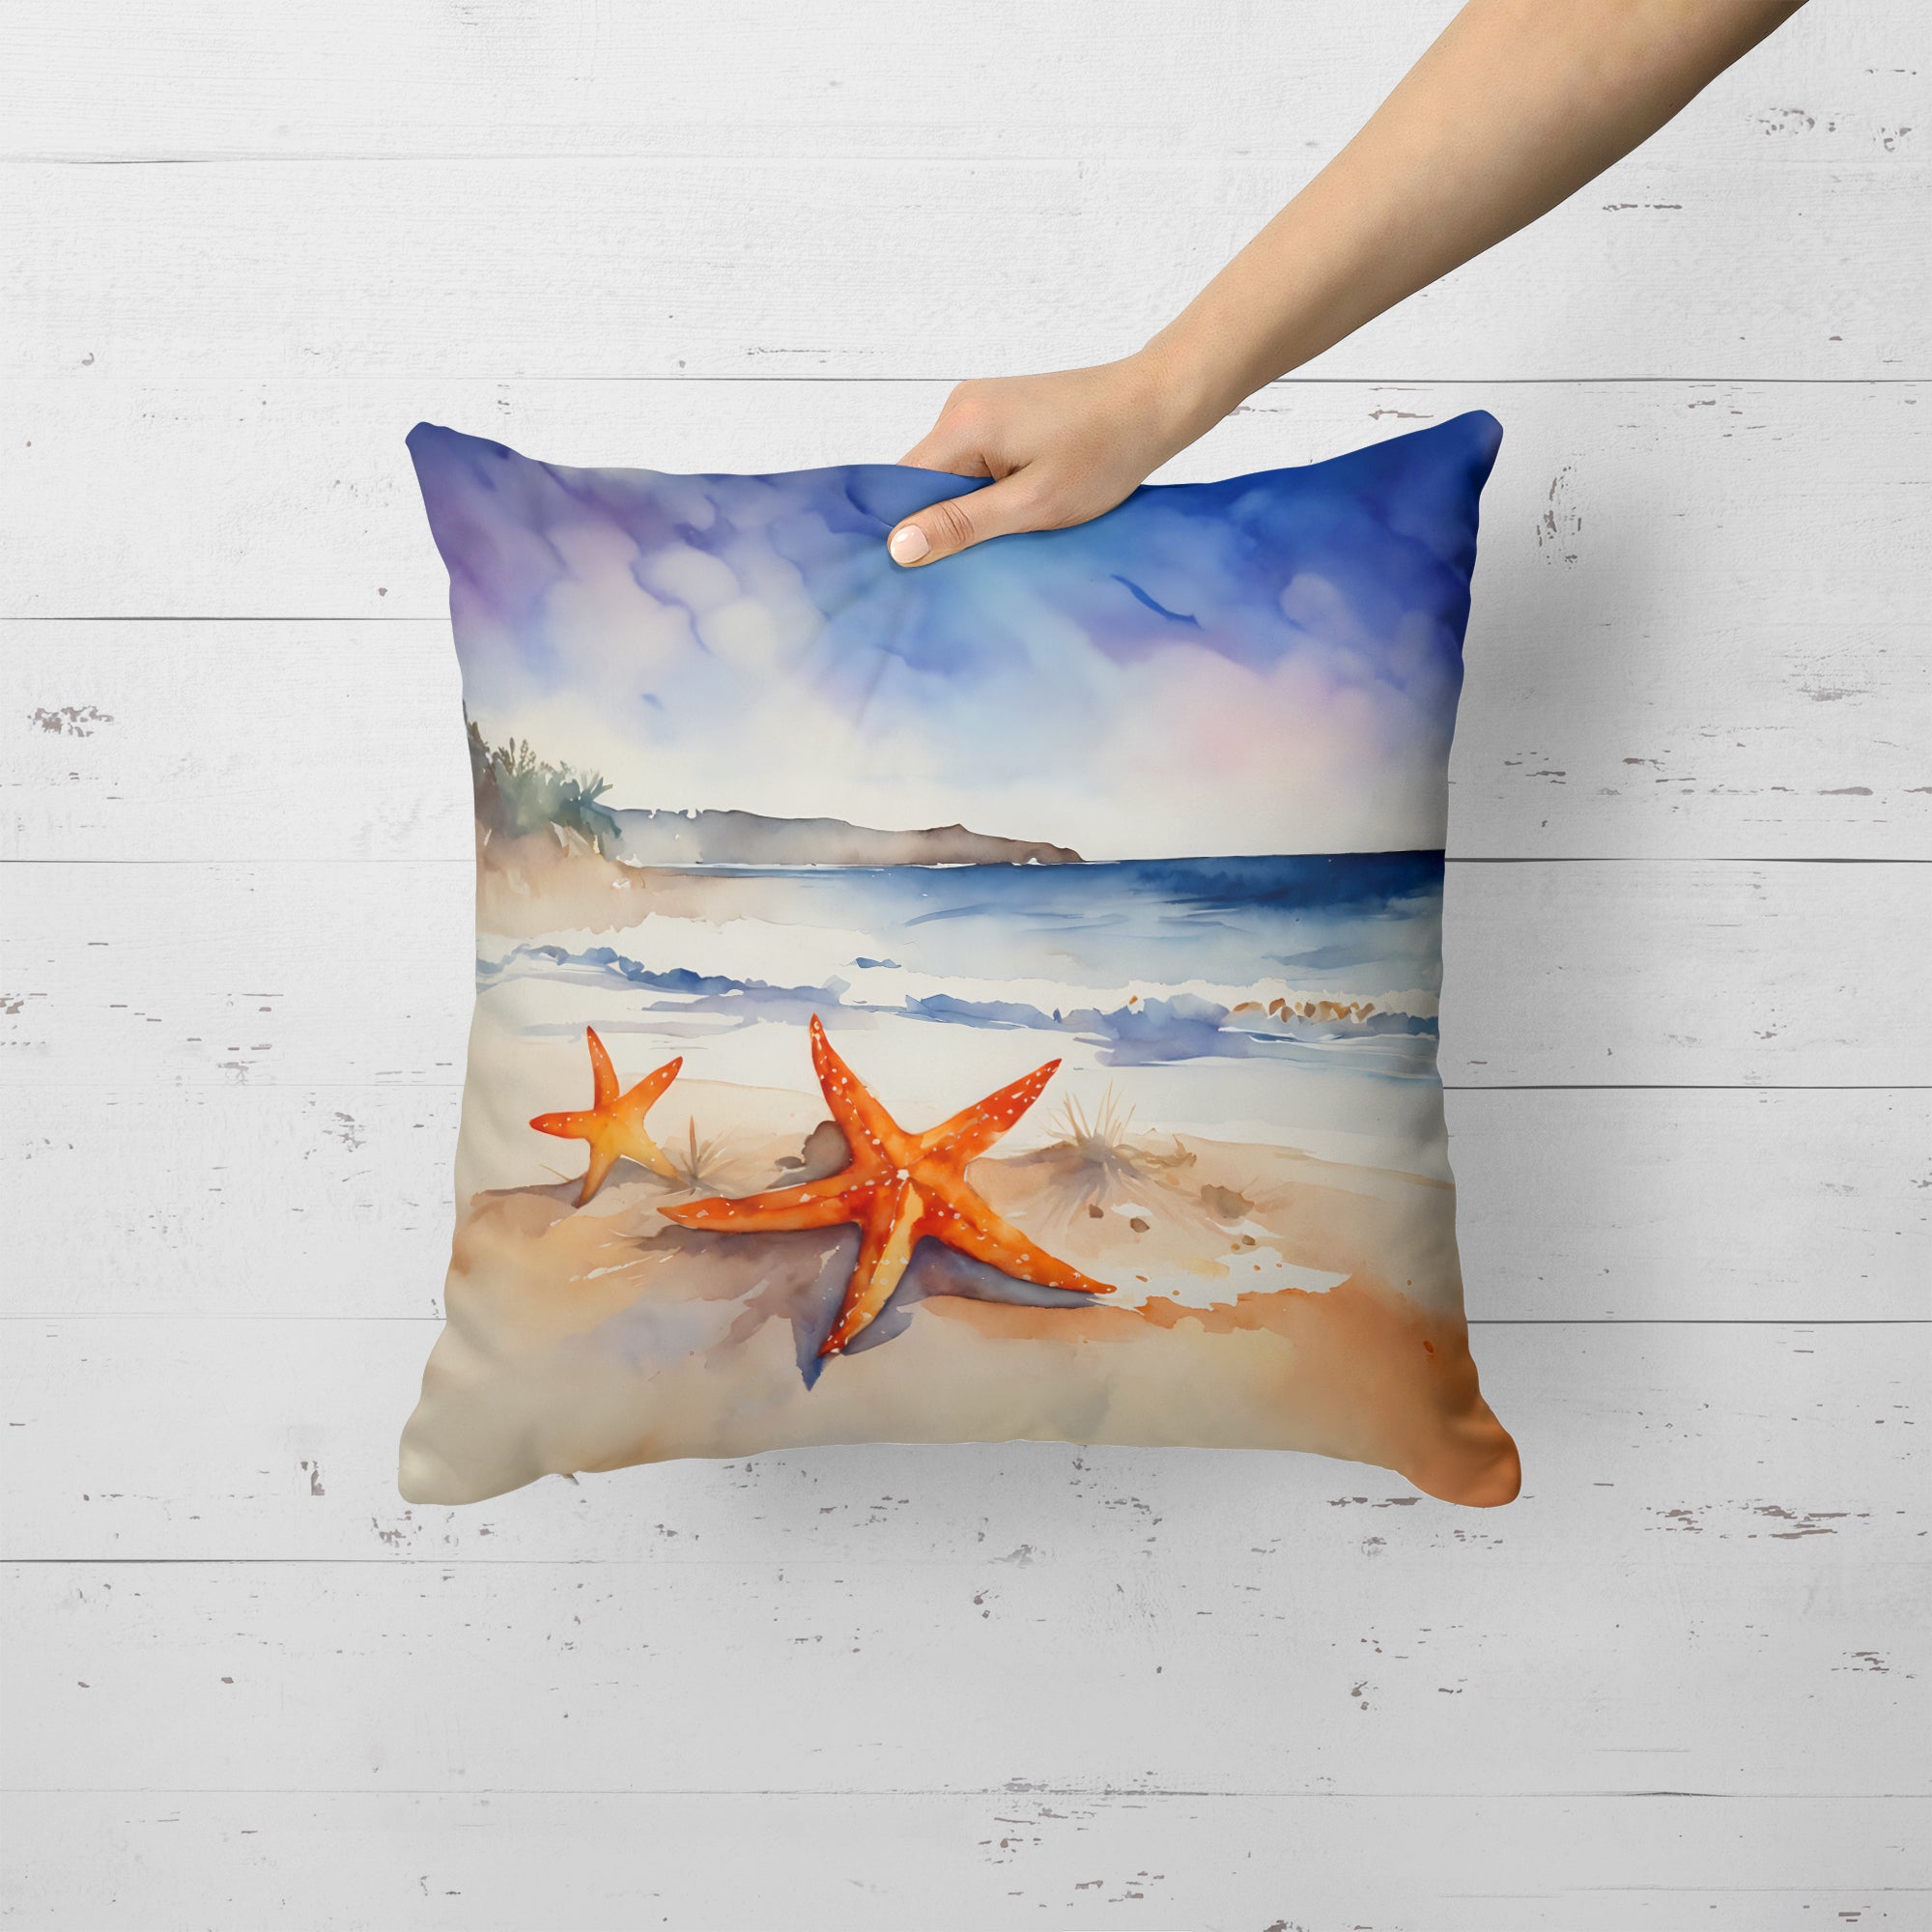 Buy this Starfish Throw Pillow